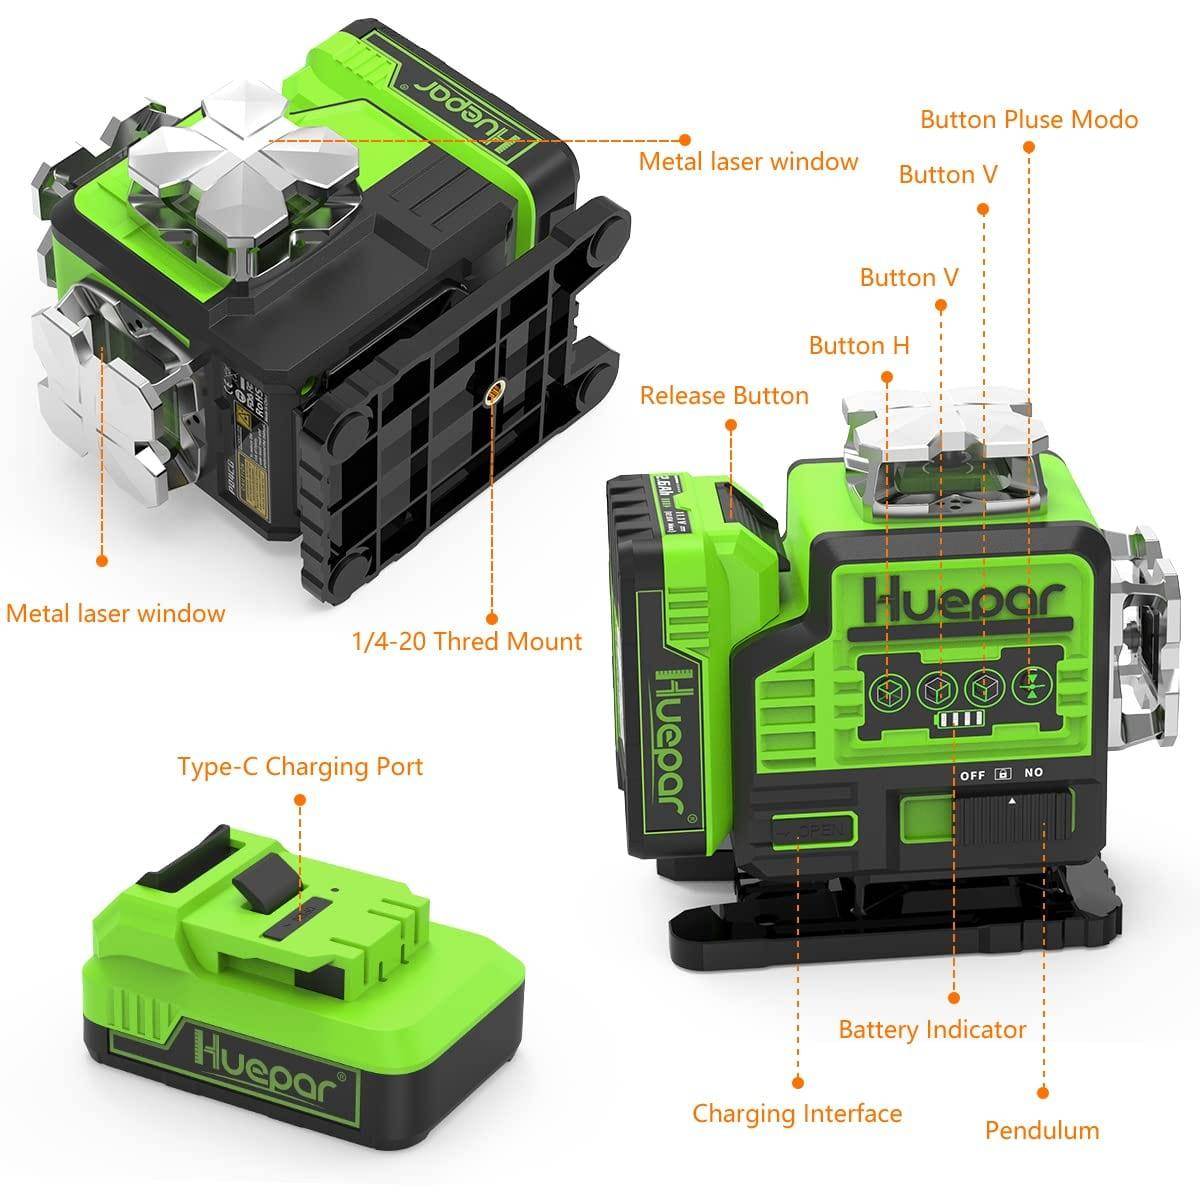 Huepar P04CG - 4x360° Laser Level Self Leveling 4D Green Beam Bluetooth Connectivity Laser Tool - HUEPAR UK